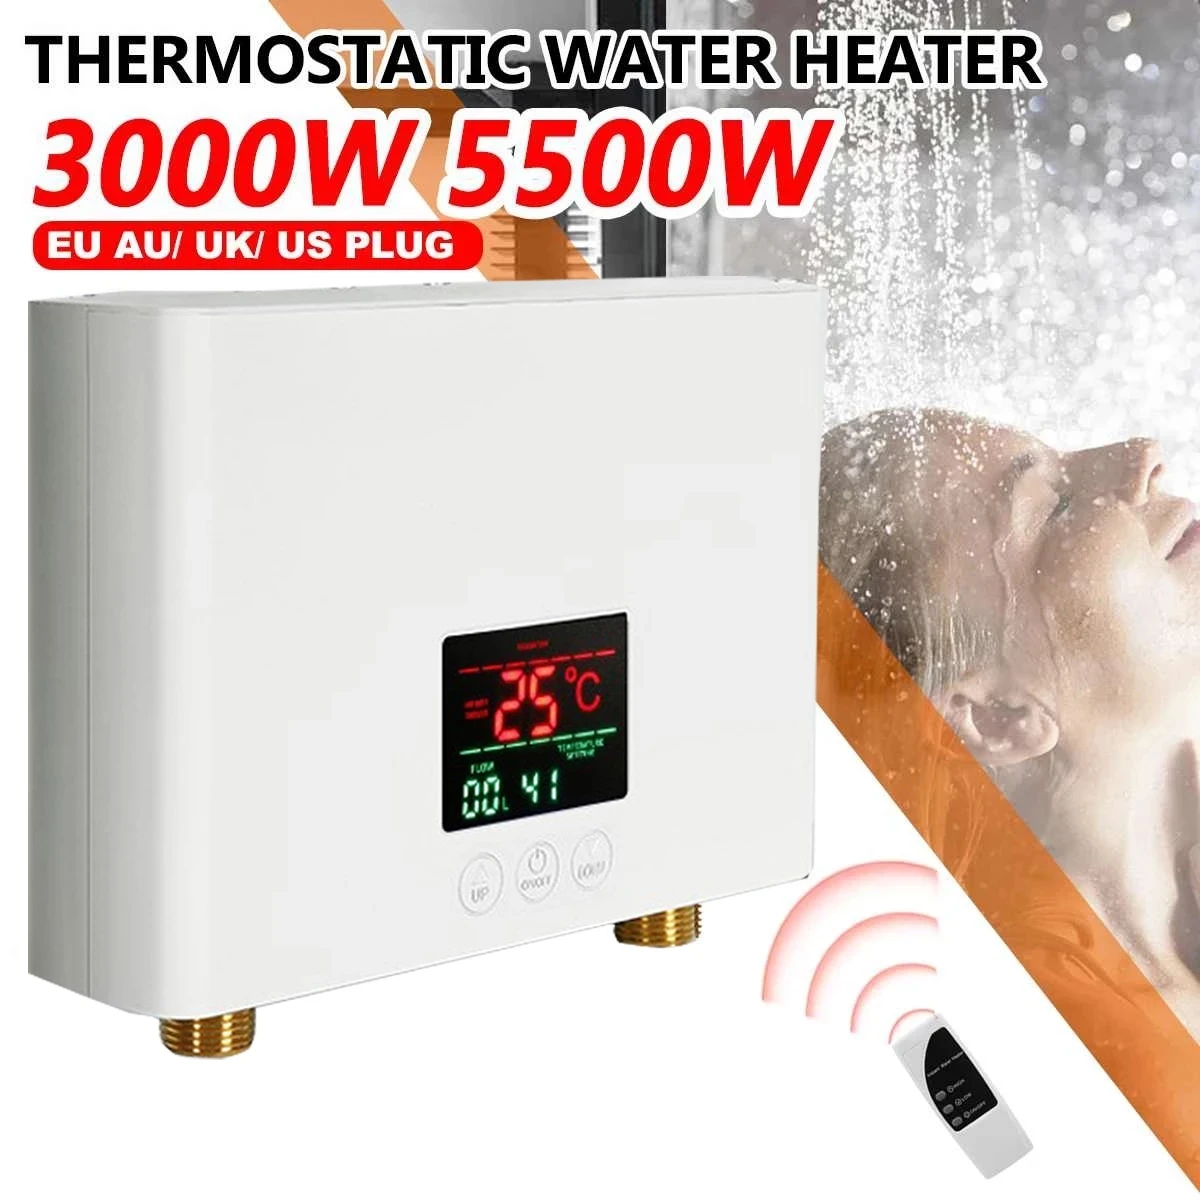 Buy electric water heater online